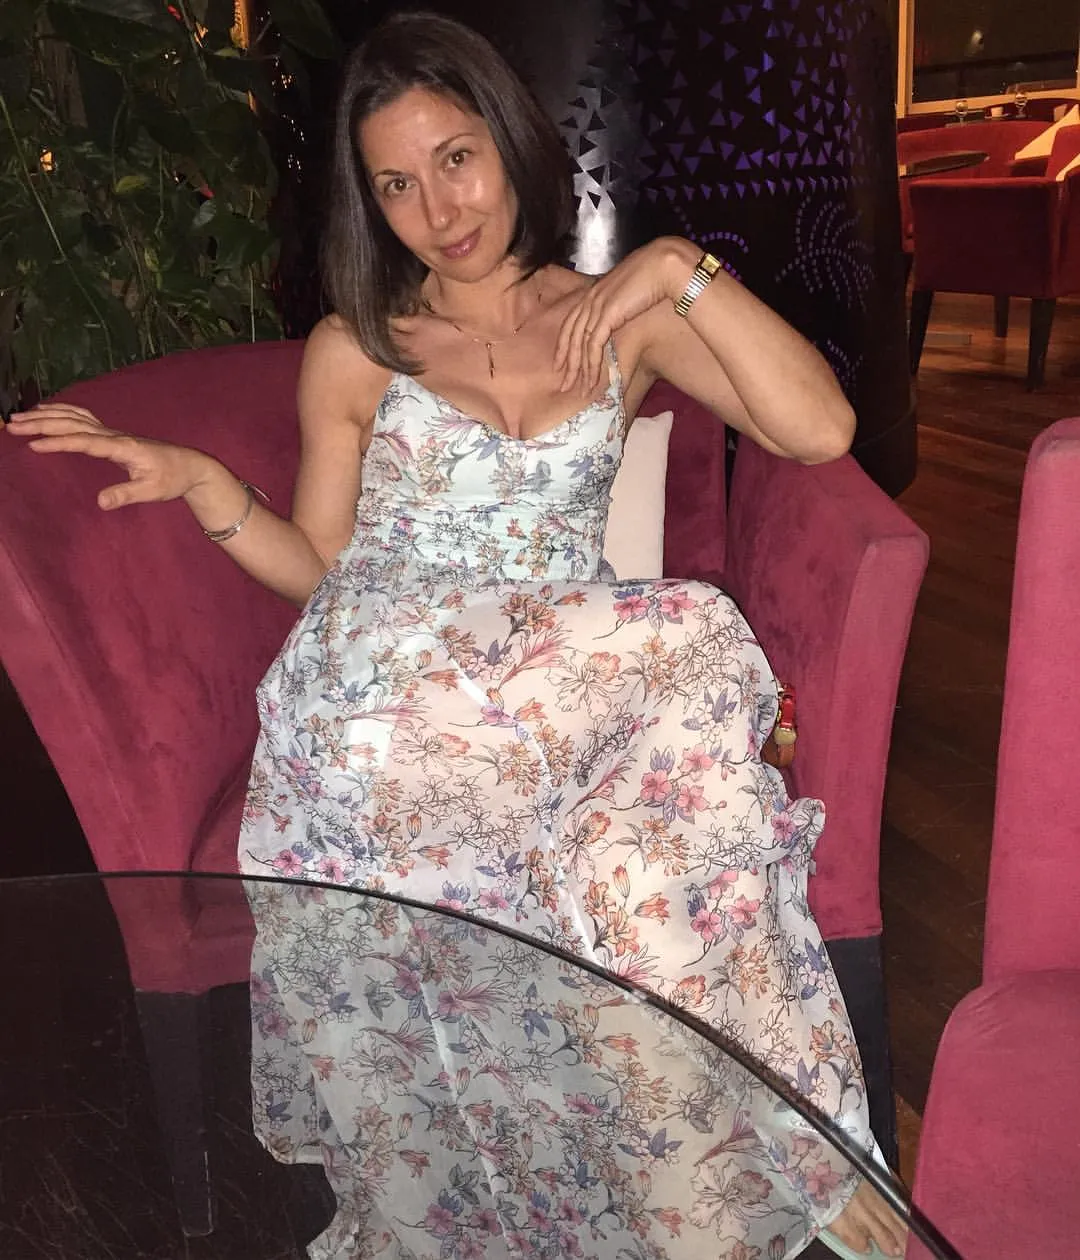 Sofia russian brides photos gallery